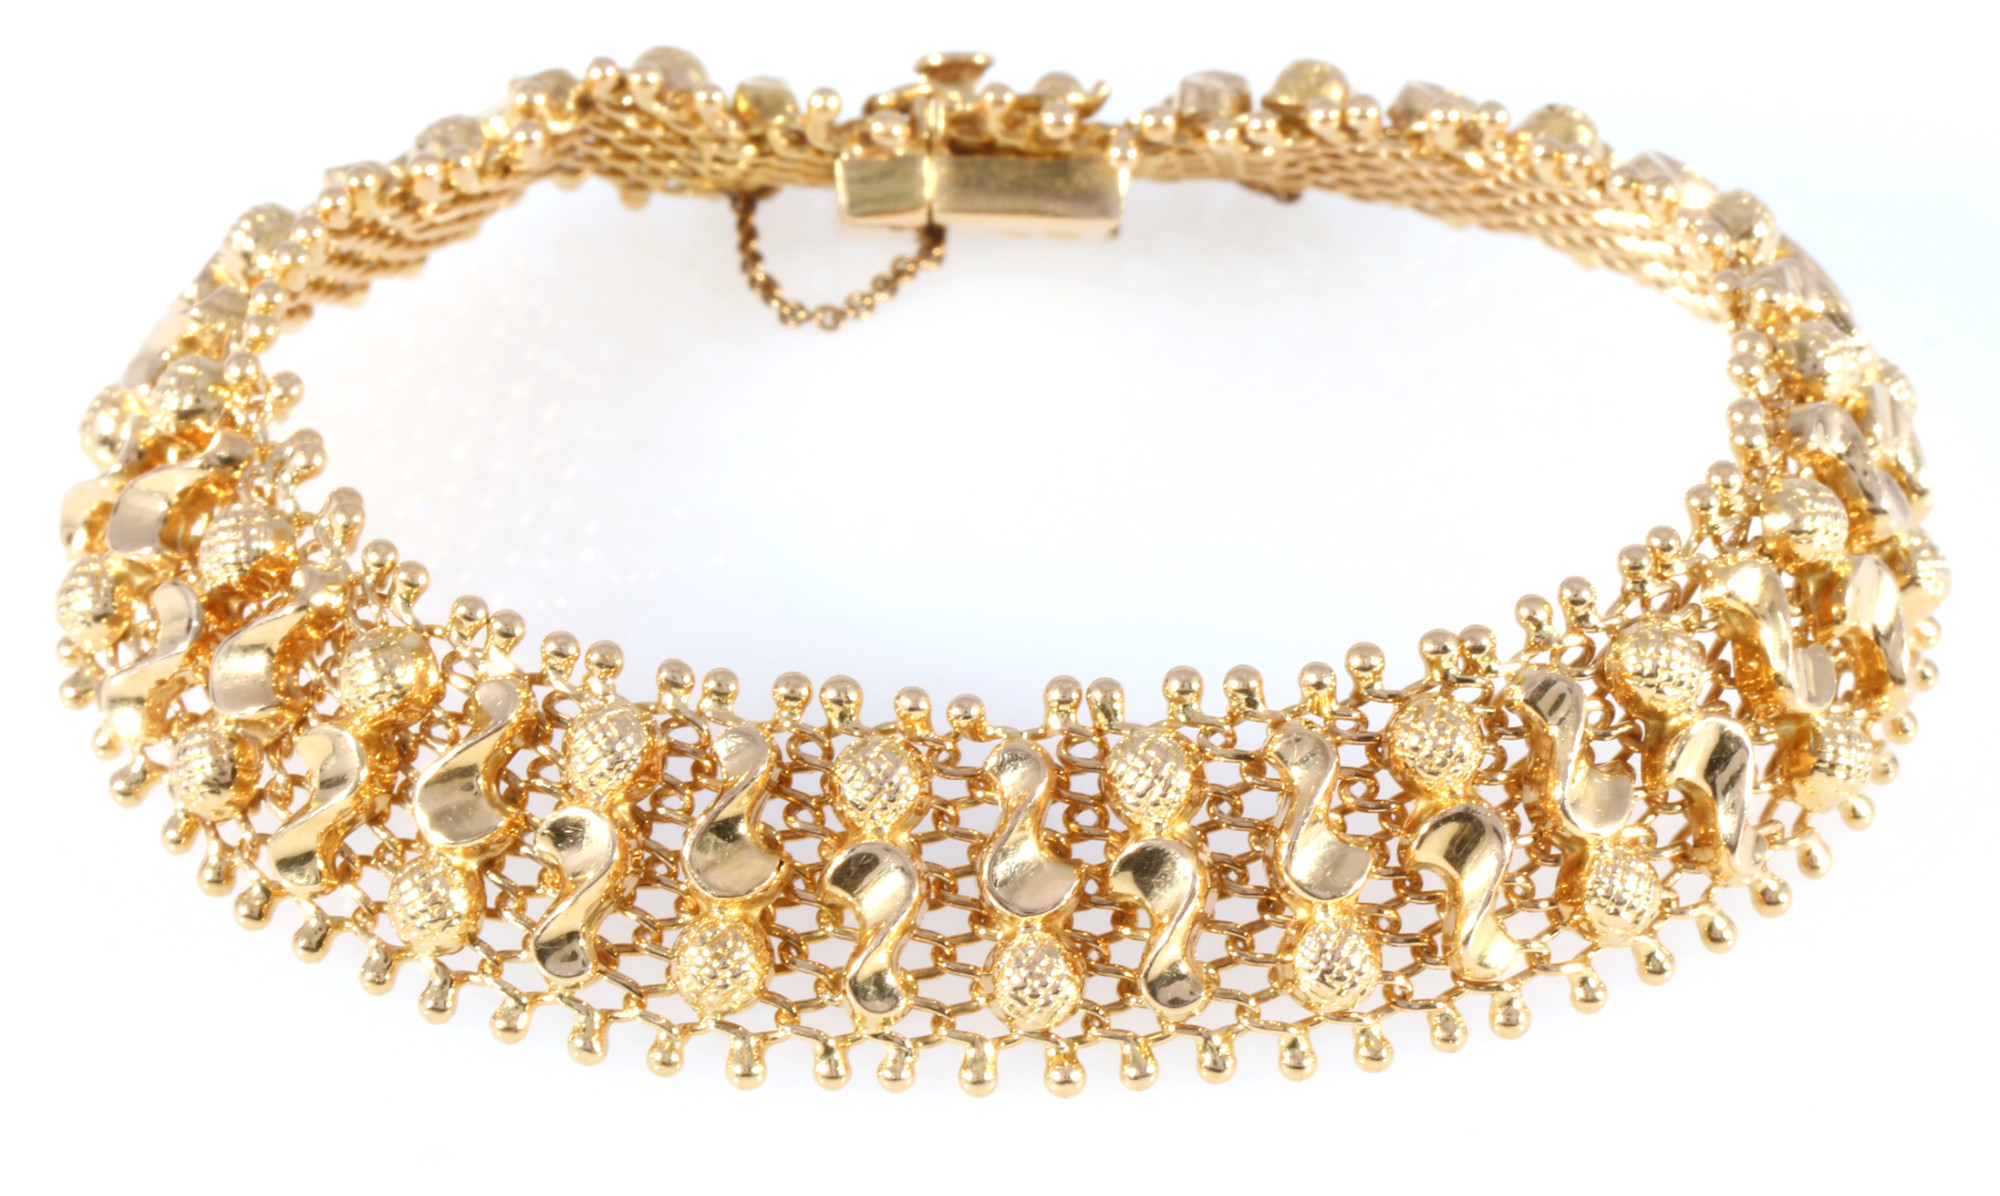 750 gold bracelet filigree work, 18K Gold Armband Filigranarbeit, - Image 3 of 4